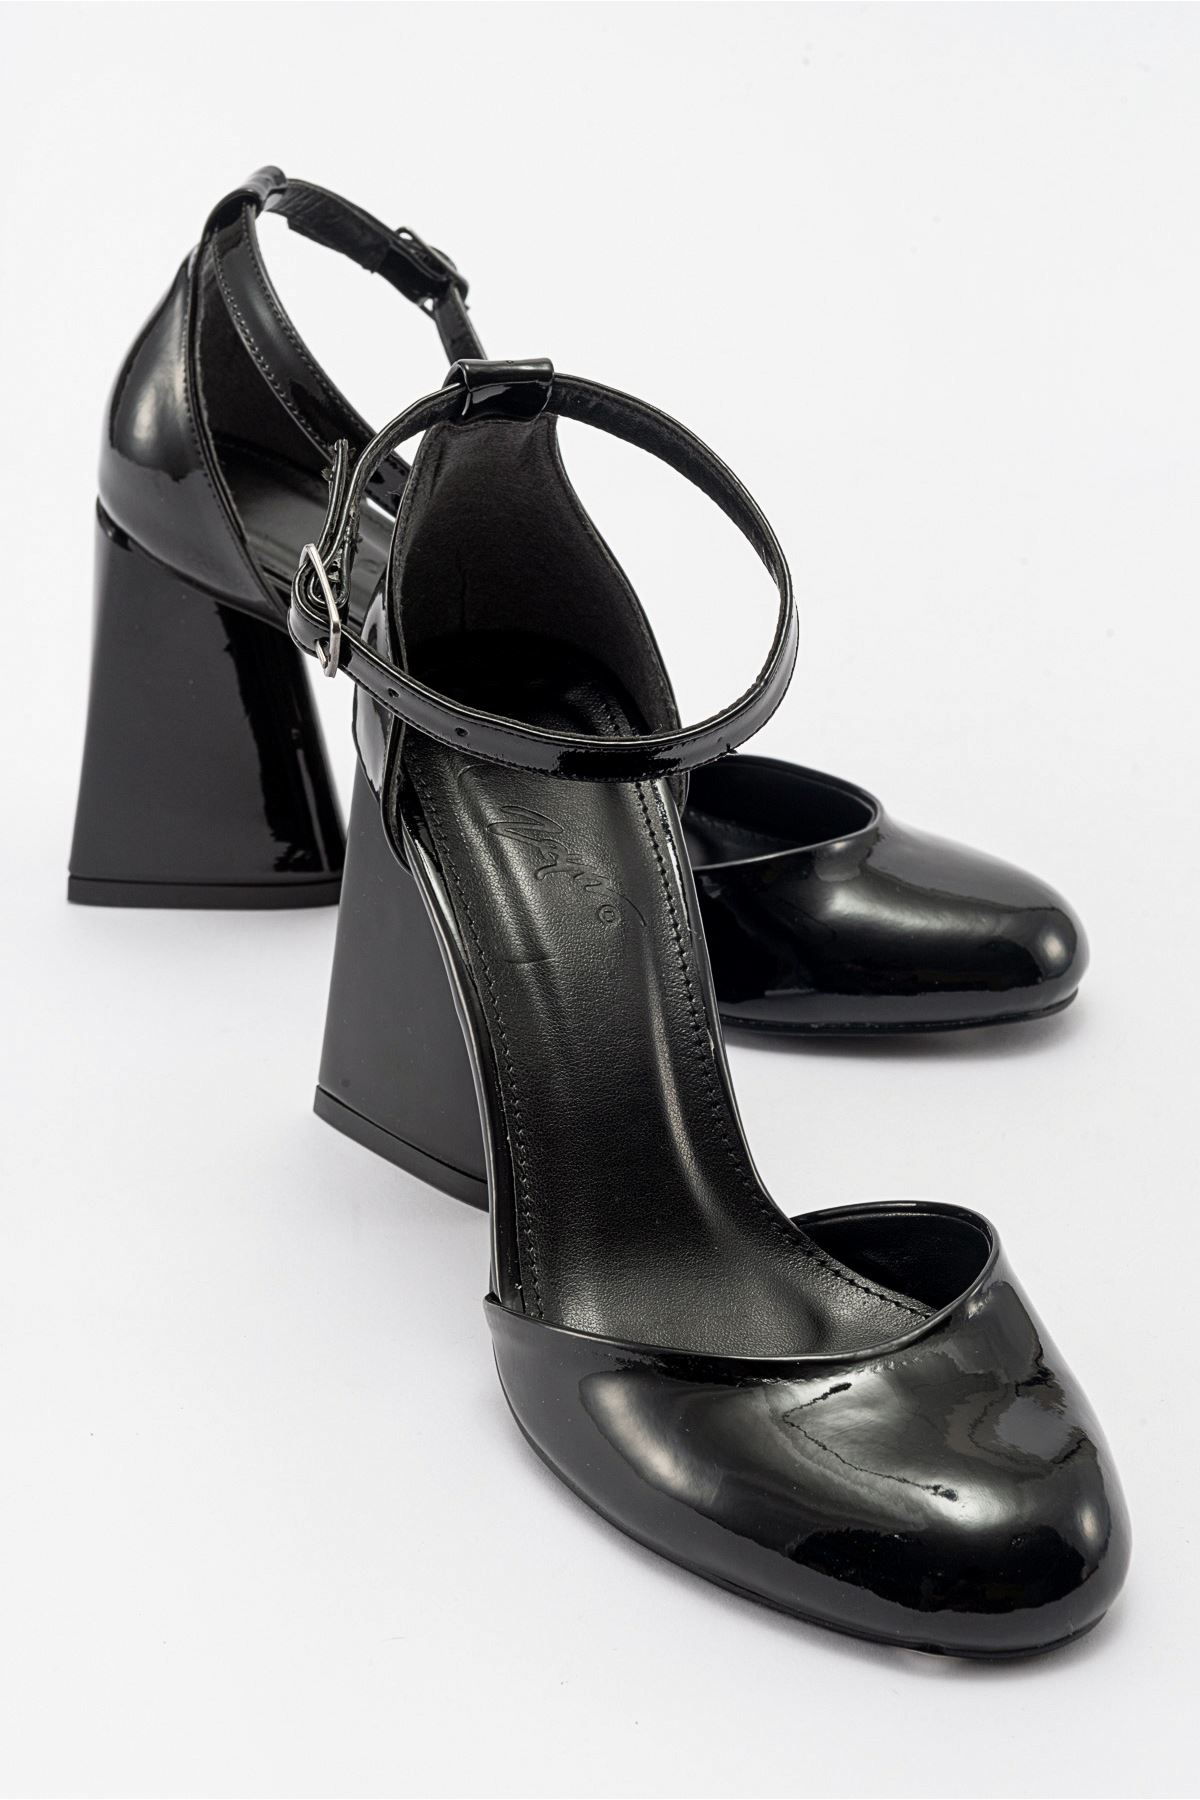 Arora Kadın Topuklu Ayakkabı Siyah Rugan 